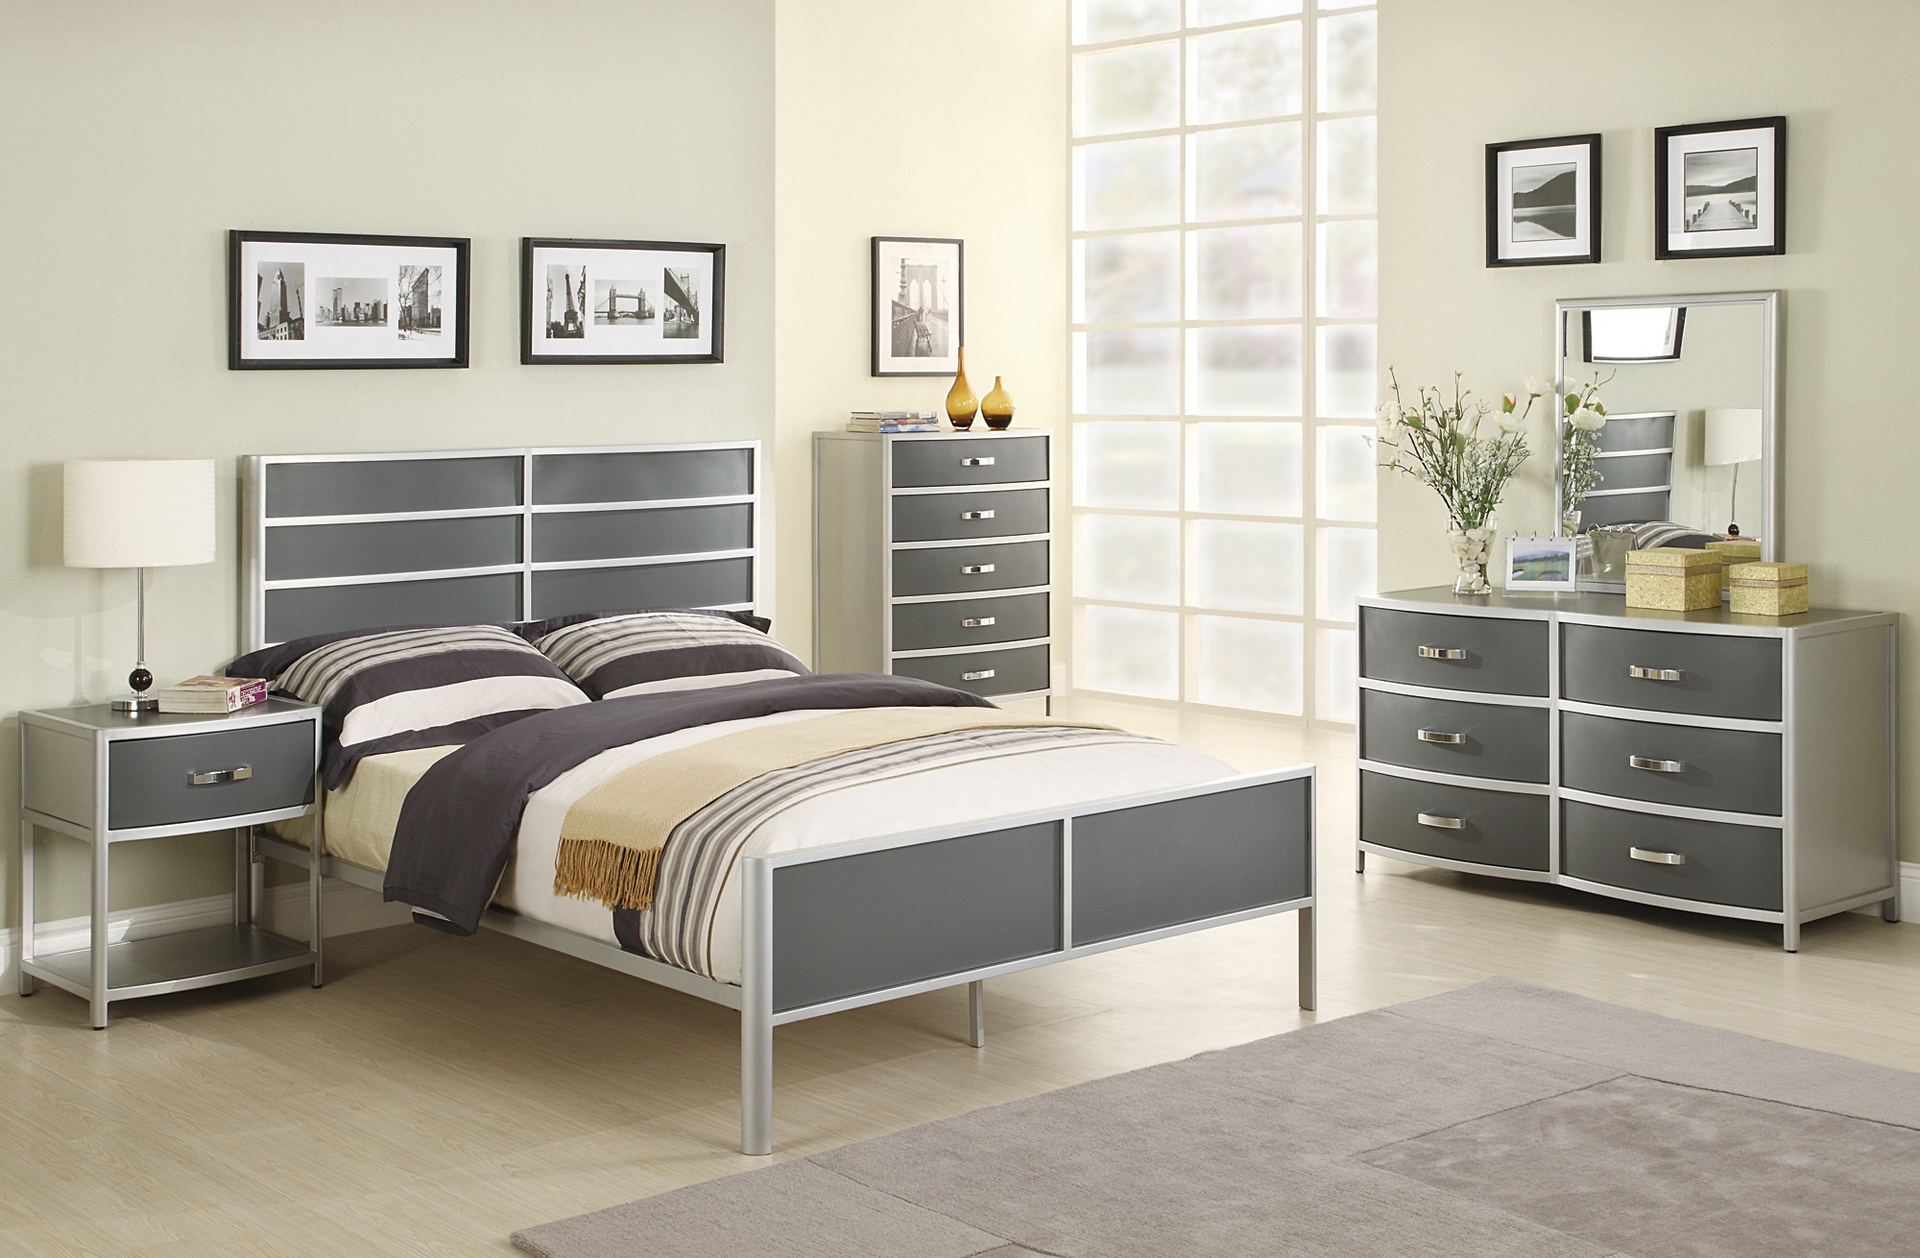 silver bedroom furniture ikea